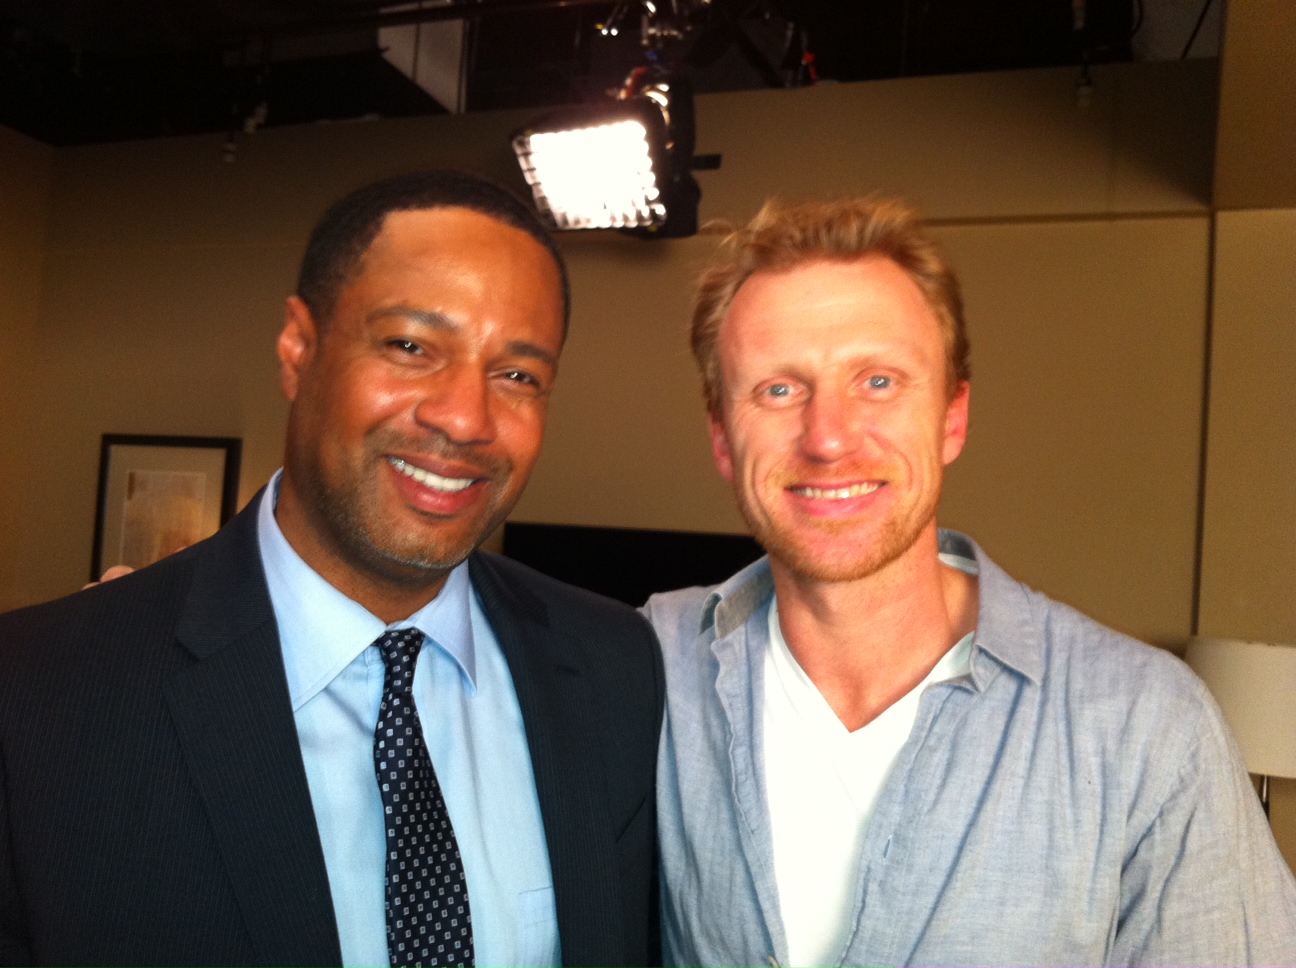 On Set Of Grey's Anatomy 2012 with Director/Actor Kevin McKidd aka Dr.Owen Hunt